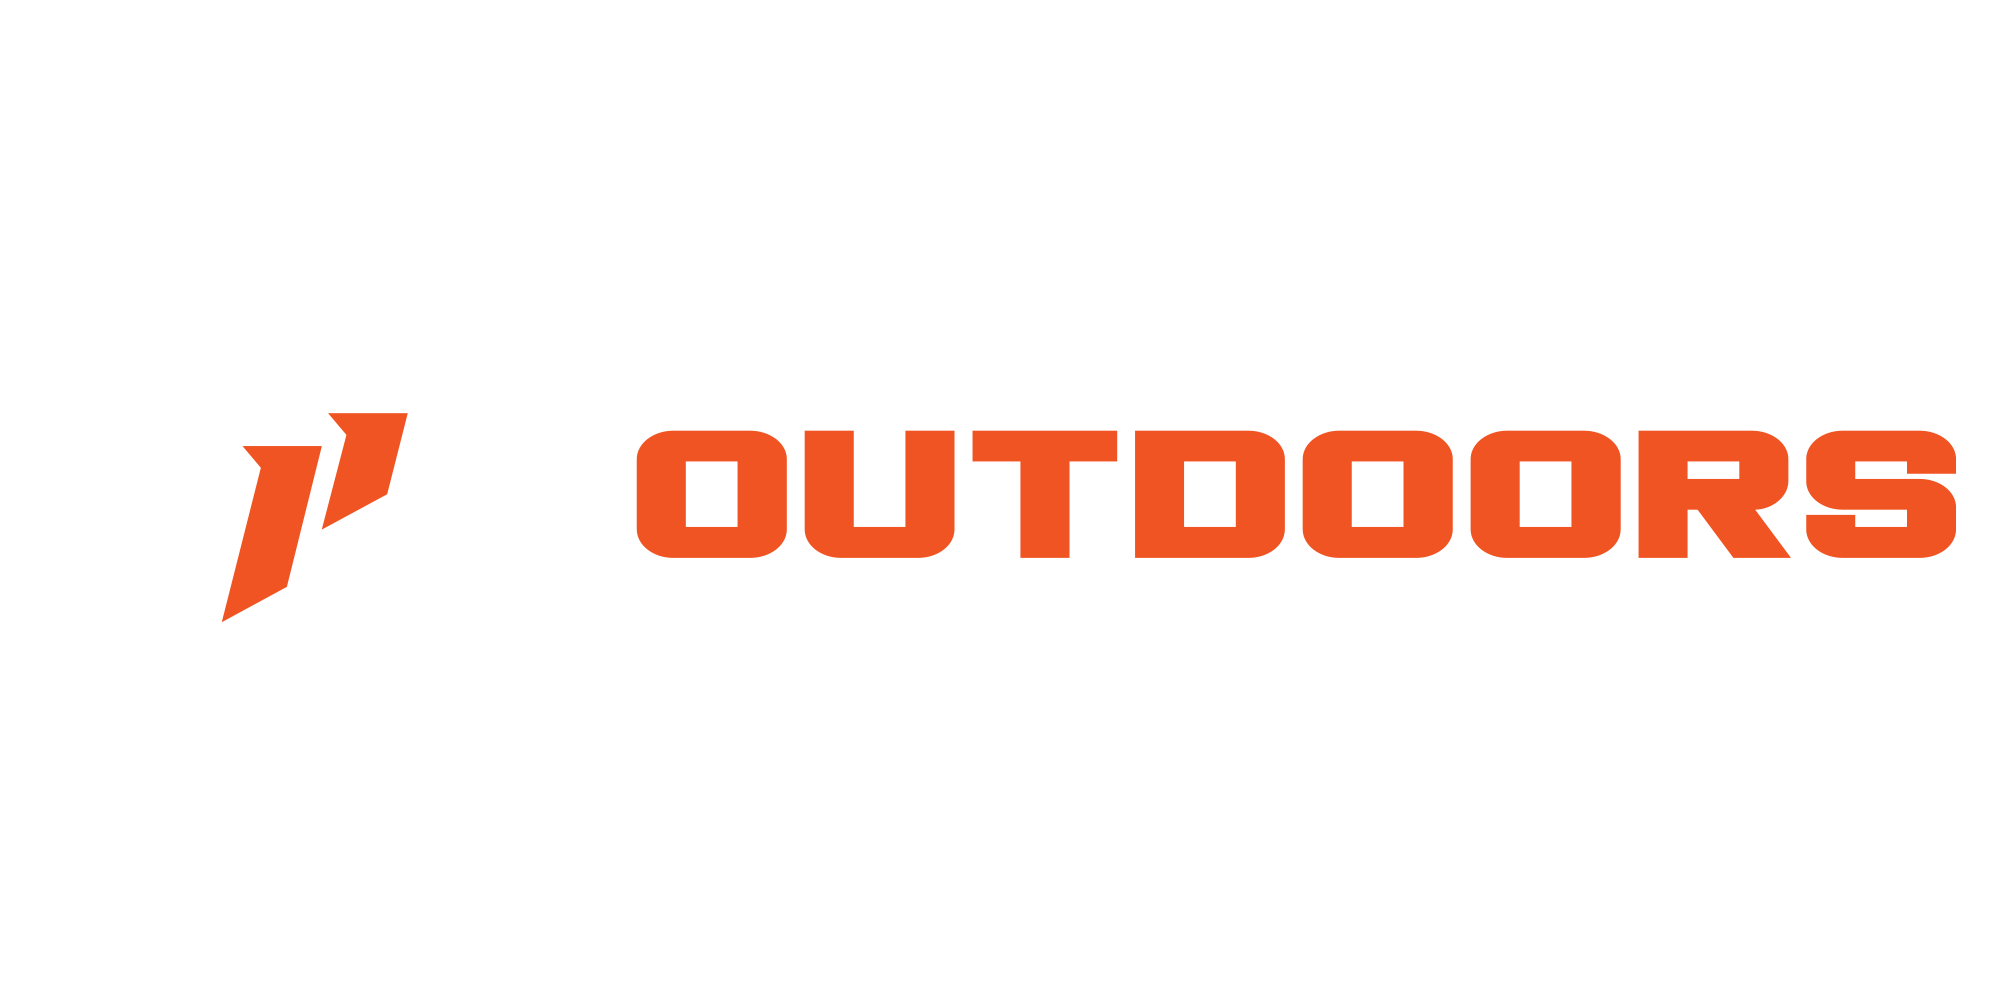 1st Phorm Outdoors